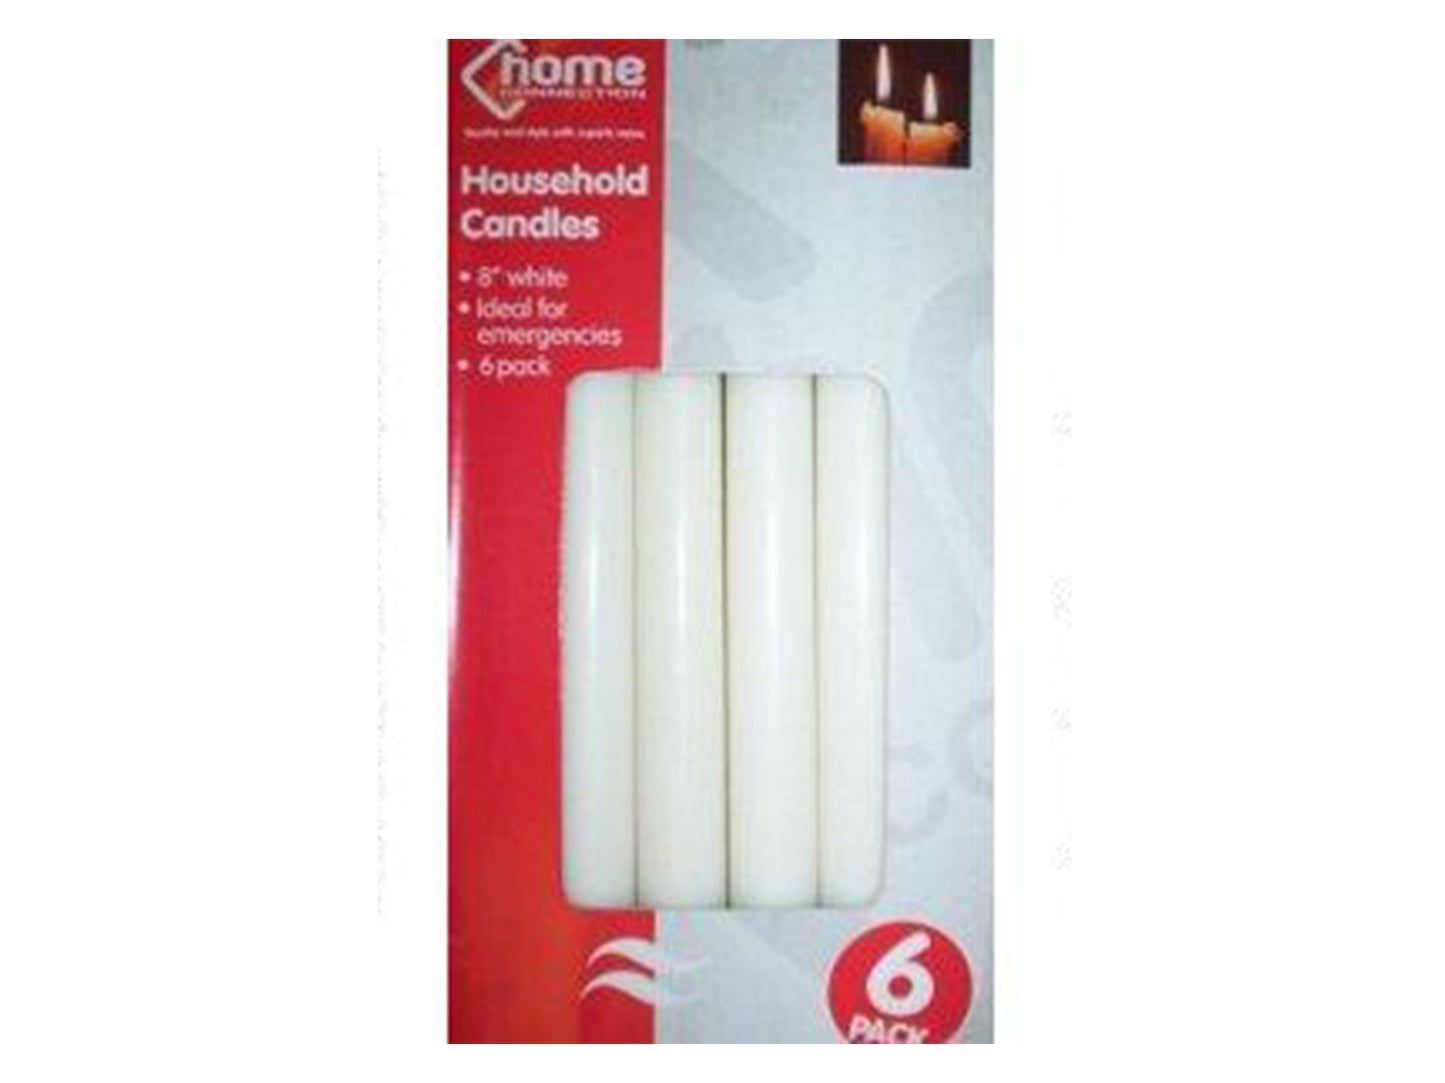 6 White Household Candles 8 Inch - 12 Packs Per Box - VIR Wholesale